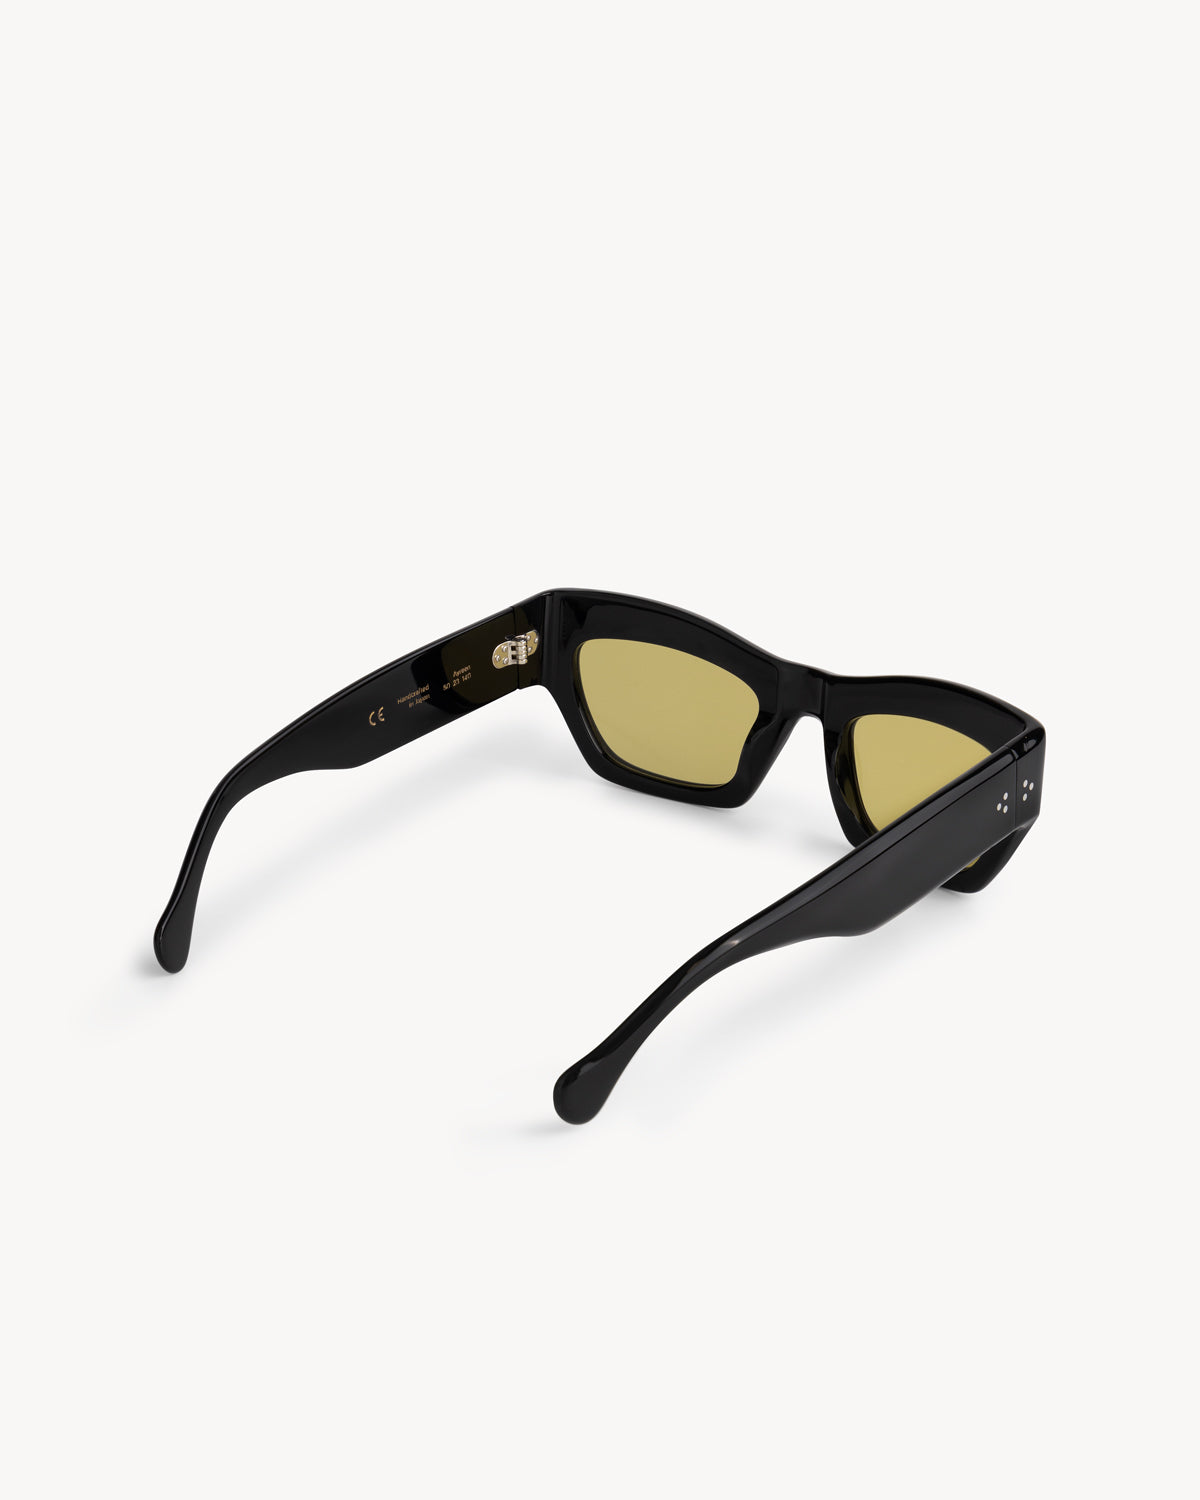 Port Tanger Ayreen Sunglasses in Black Acetate and Warm Olive Lenses 3